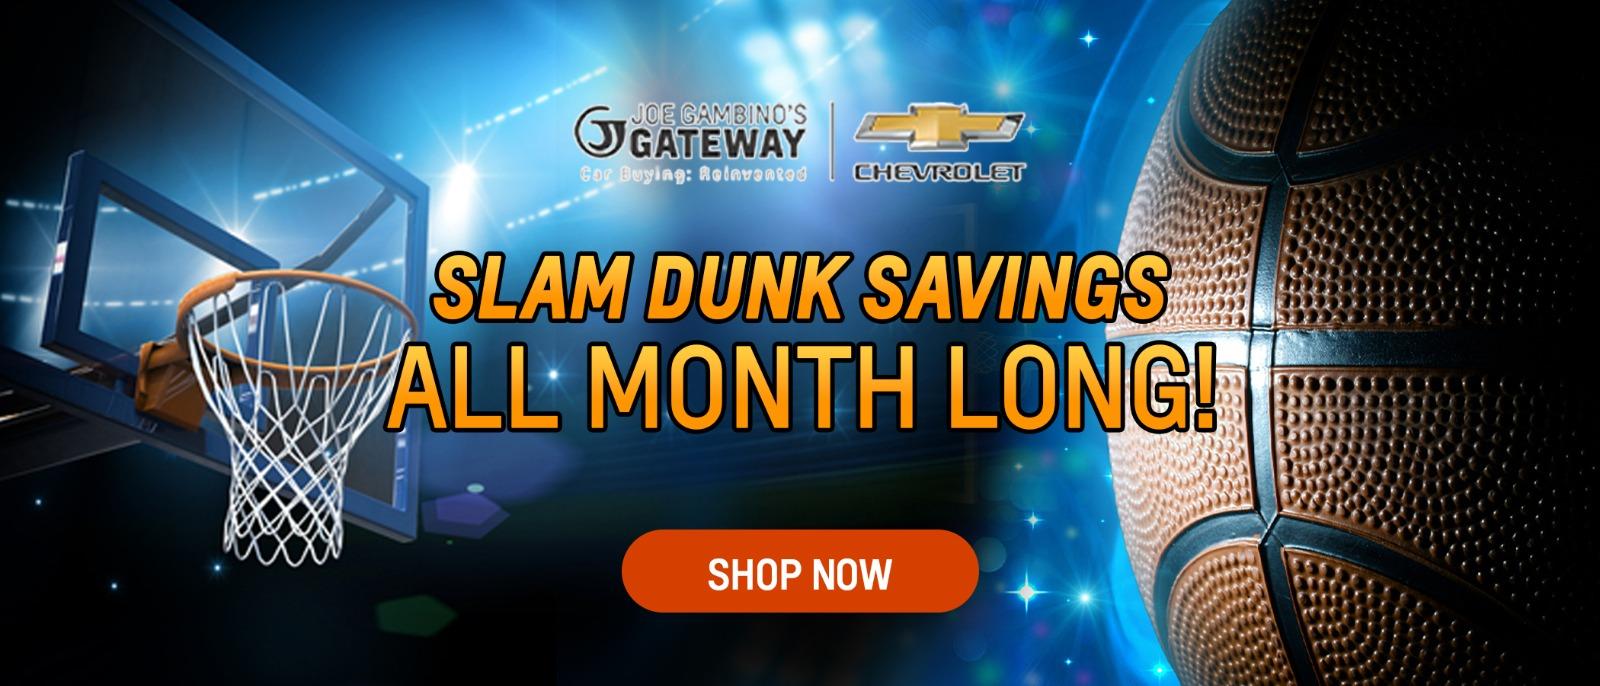 Slam Dunk Savings
ALL MONTH LONG!